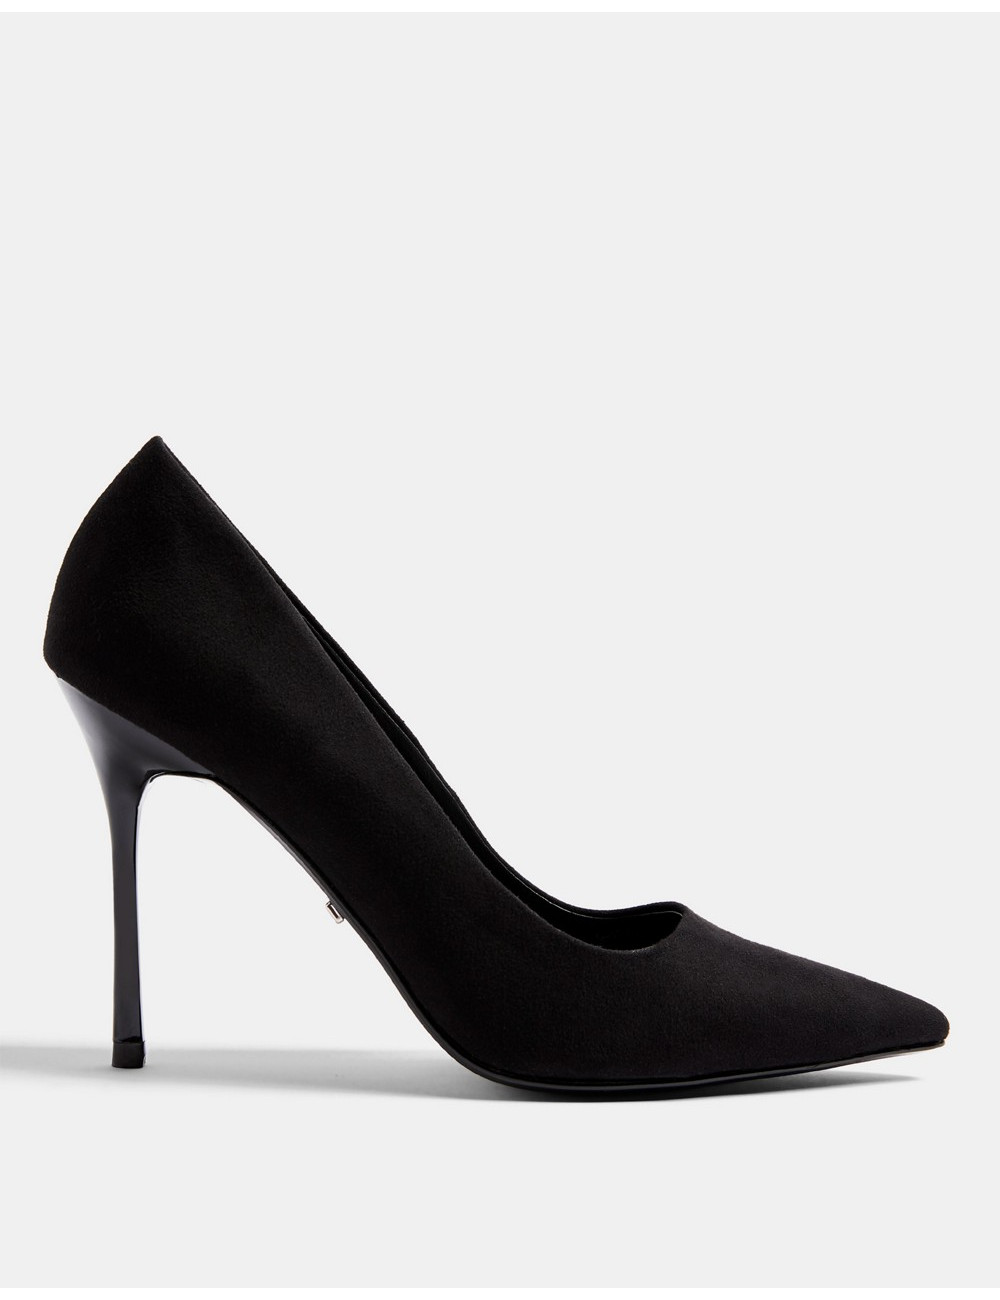 Topshop court shoe in black